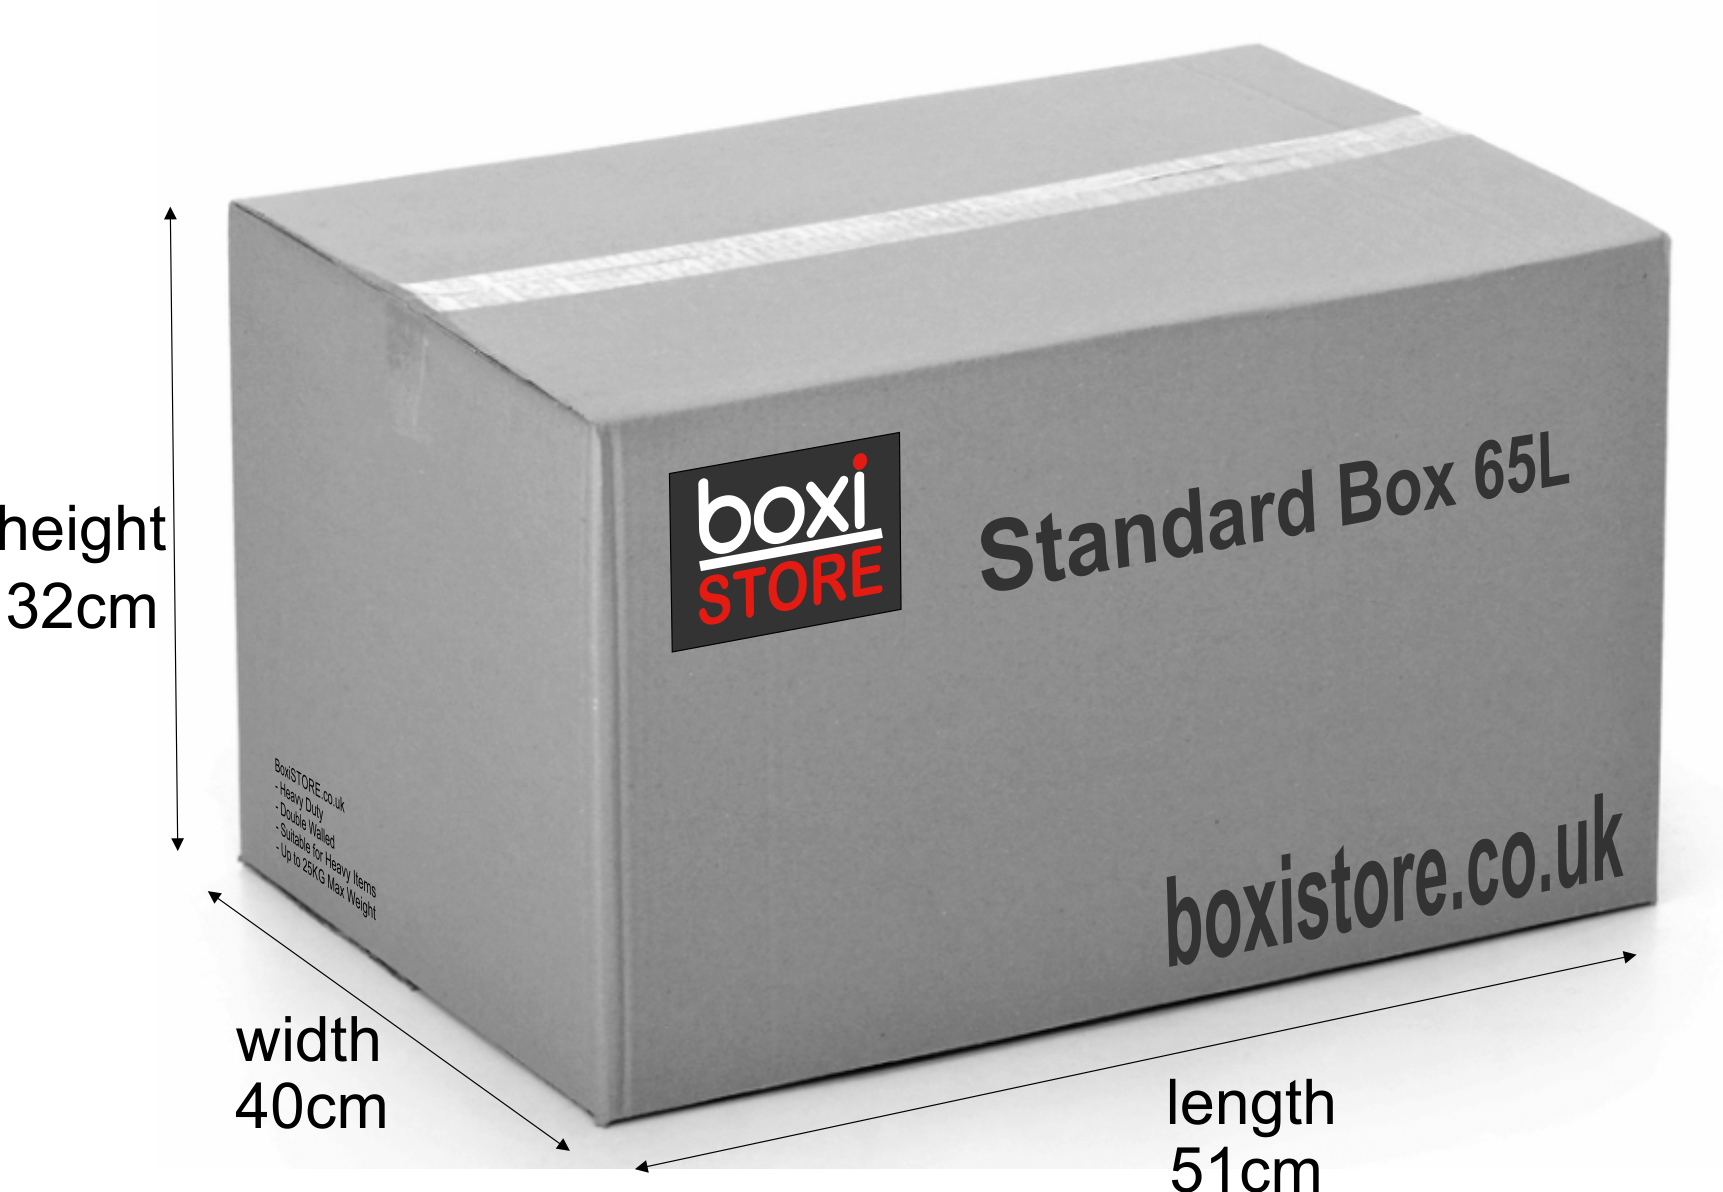 BoxiStore Storage By the Box STD Box